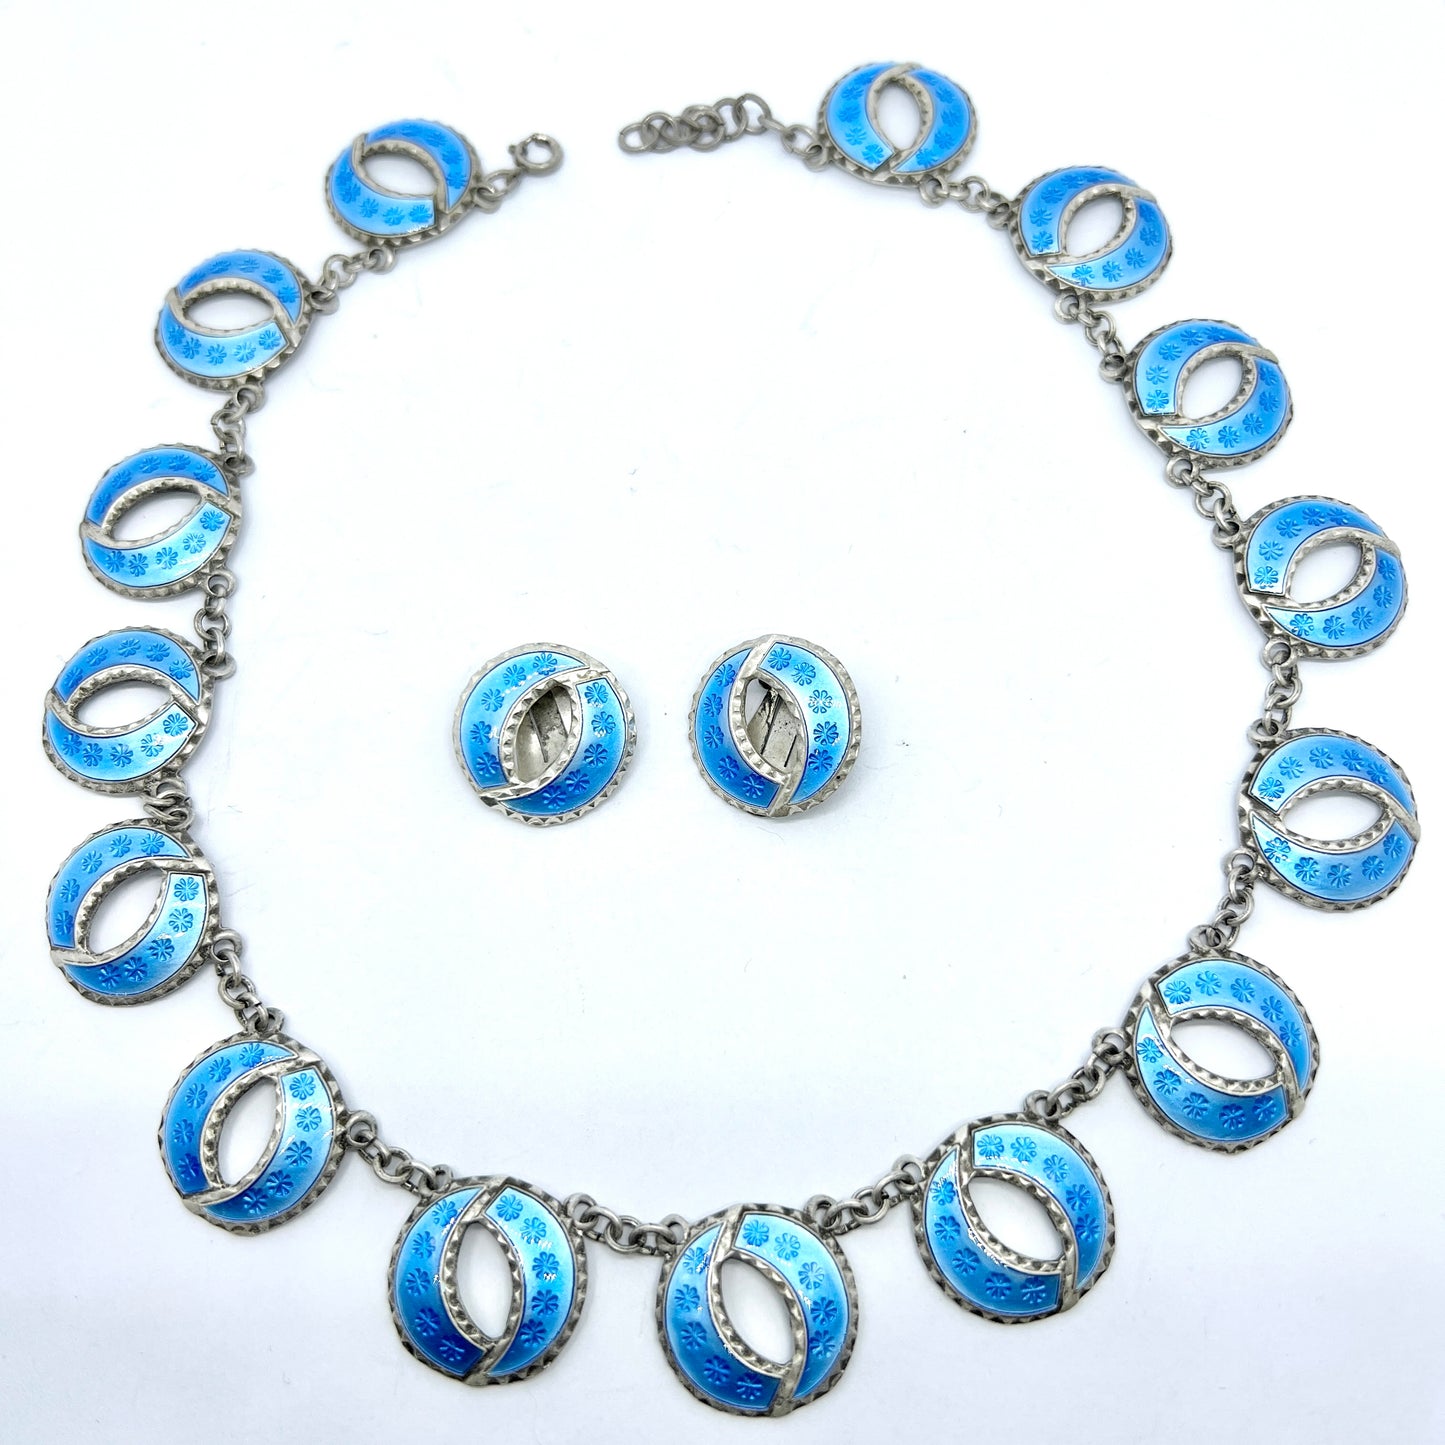 Andresen & Scheinpflug, Norway c 1950s. Sterling Silver Blue Enamel Necklace + Earrings.